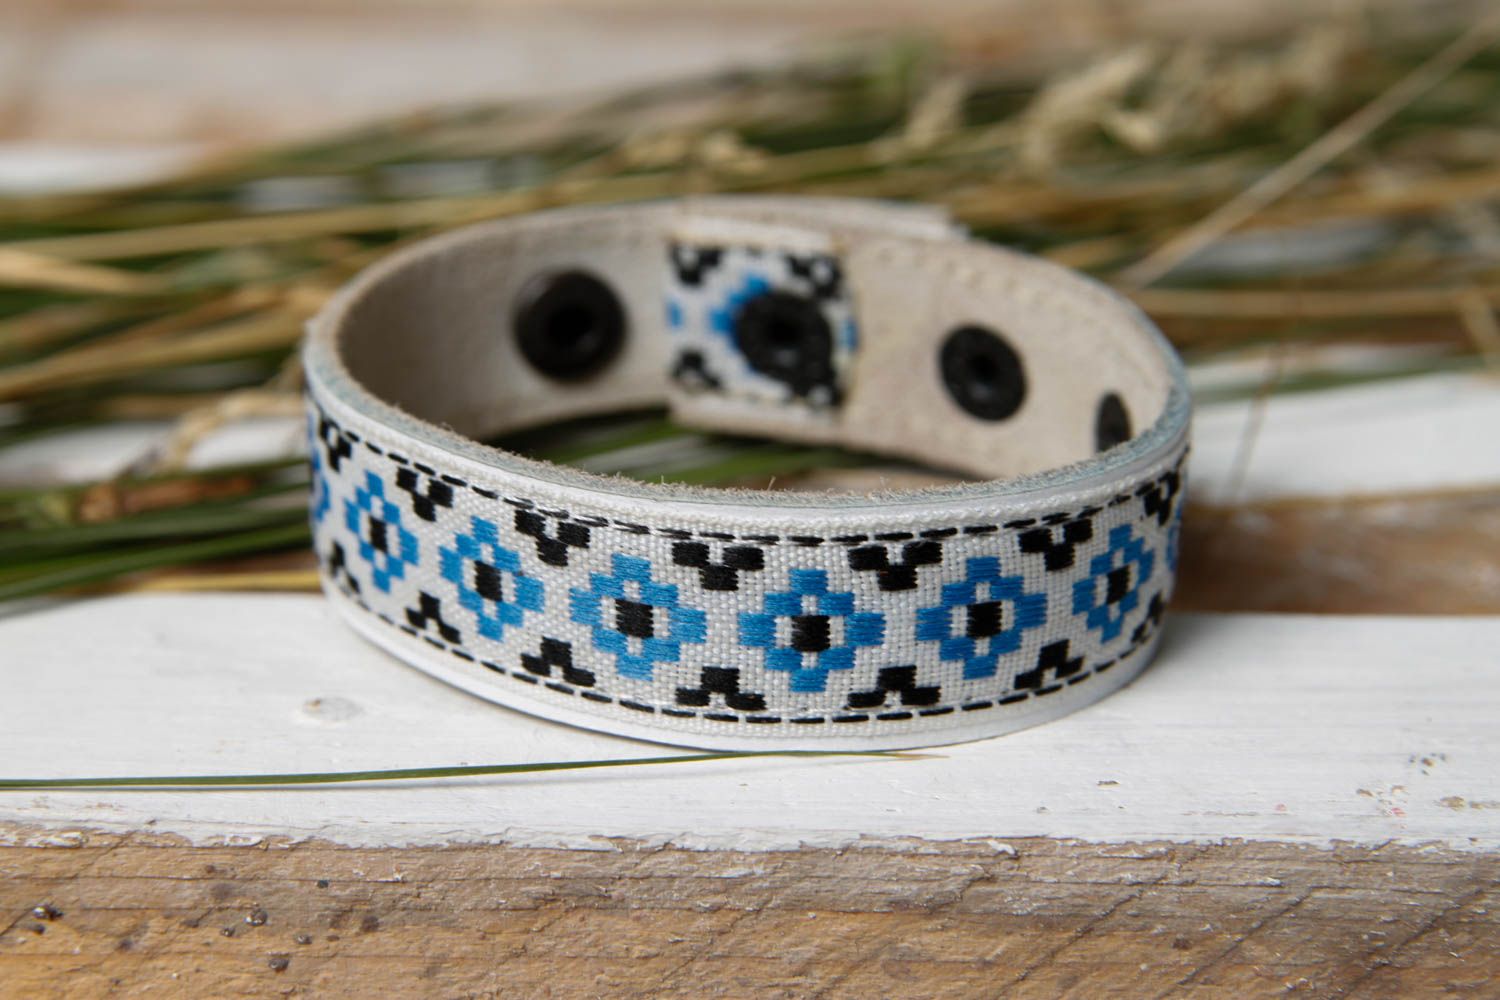 Stylish handmade leather bracelet leather goods artisan jewelry designs photo 1